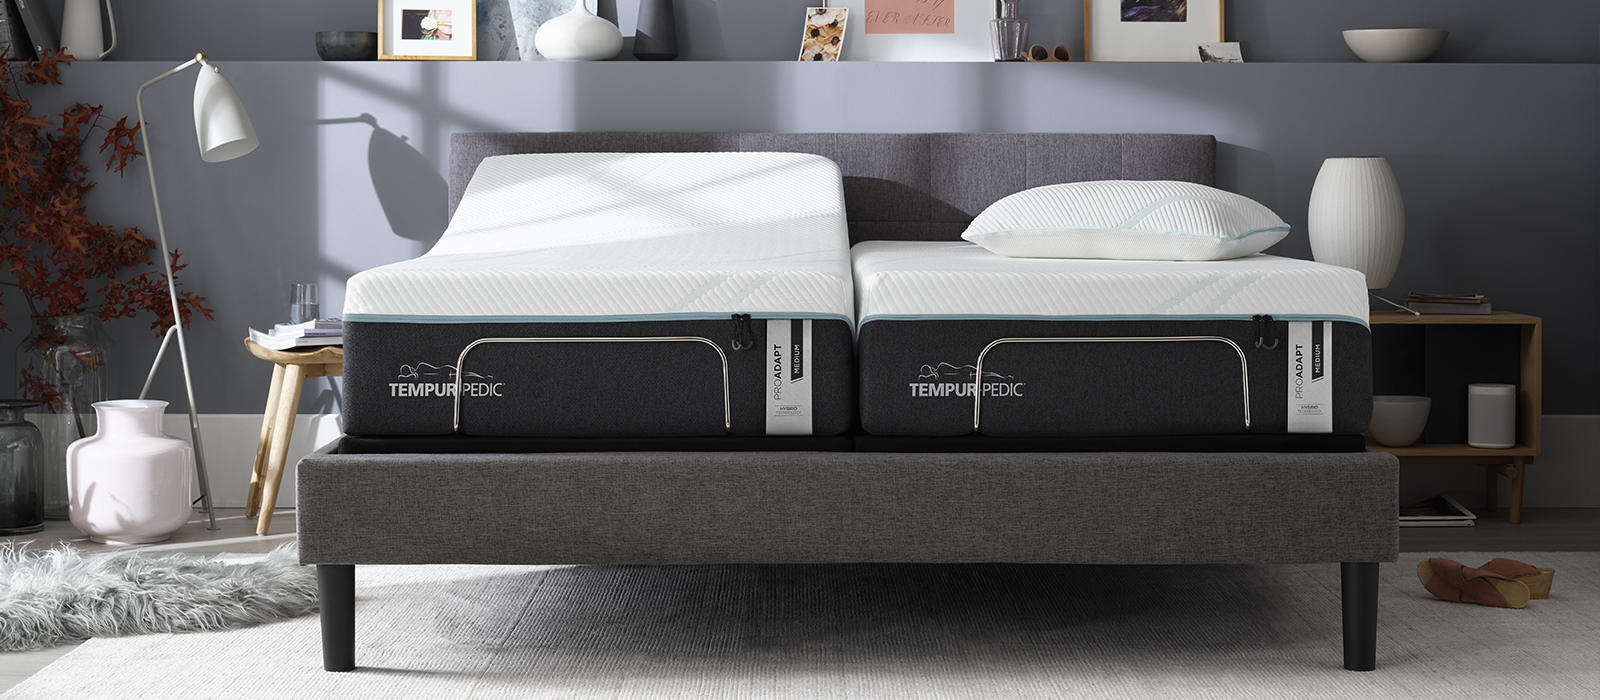 tempur-proadapt medium hybrid king mattress